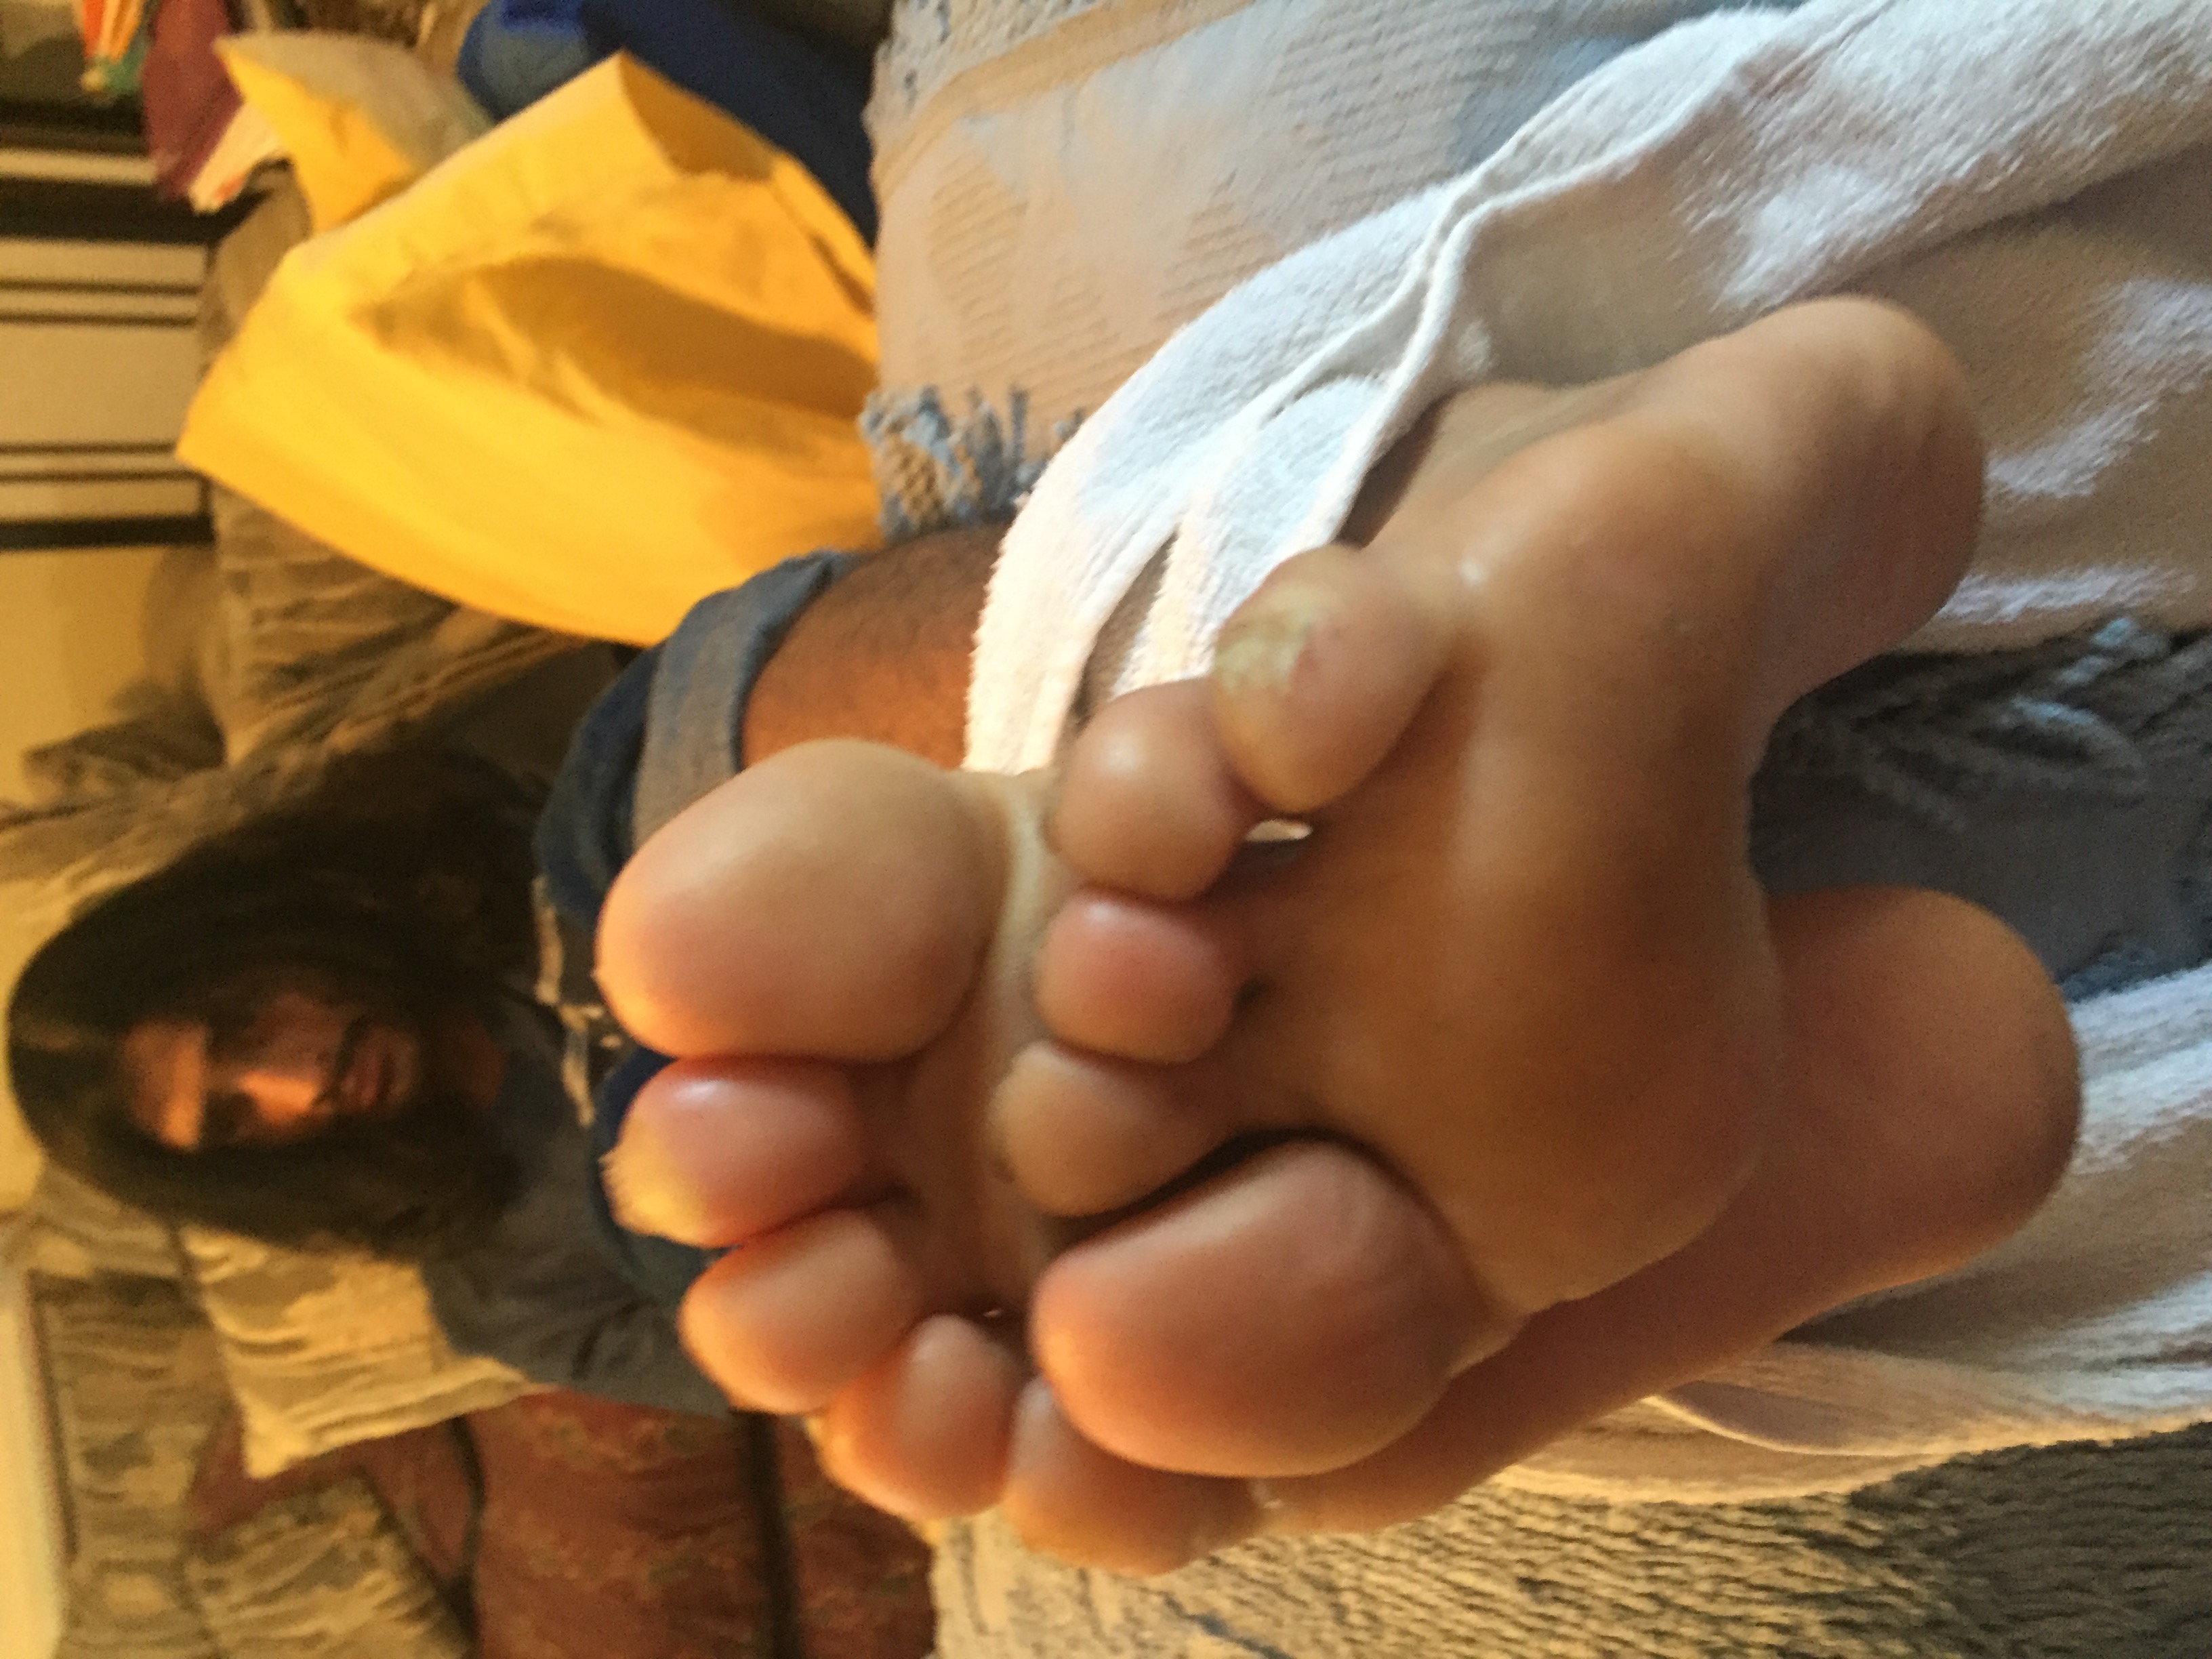 Malefootflava shows off Arturo's thick soles